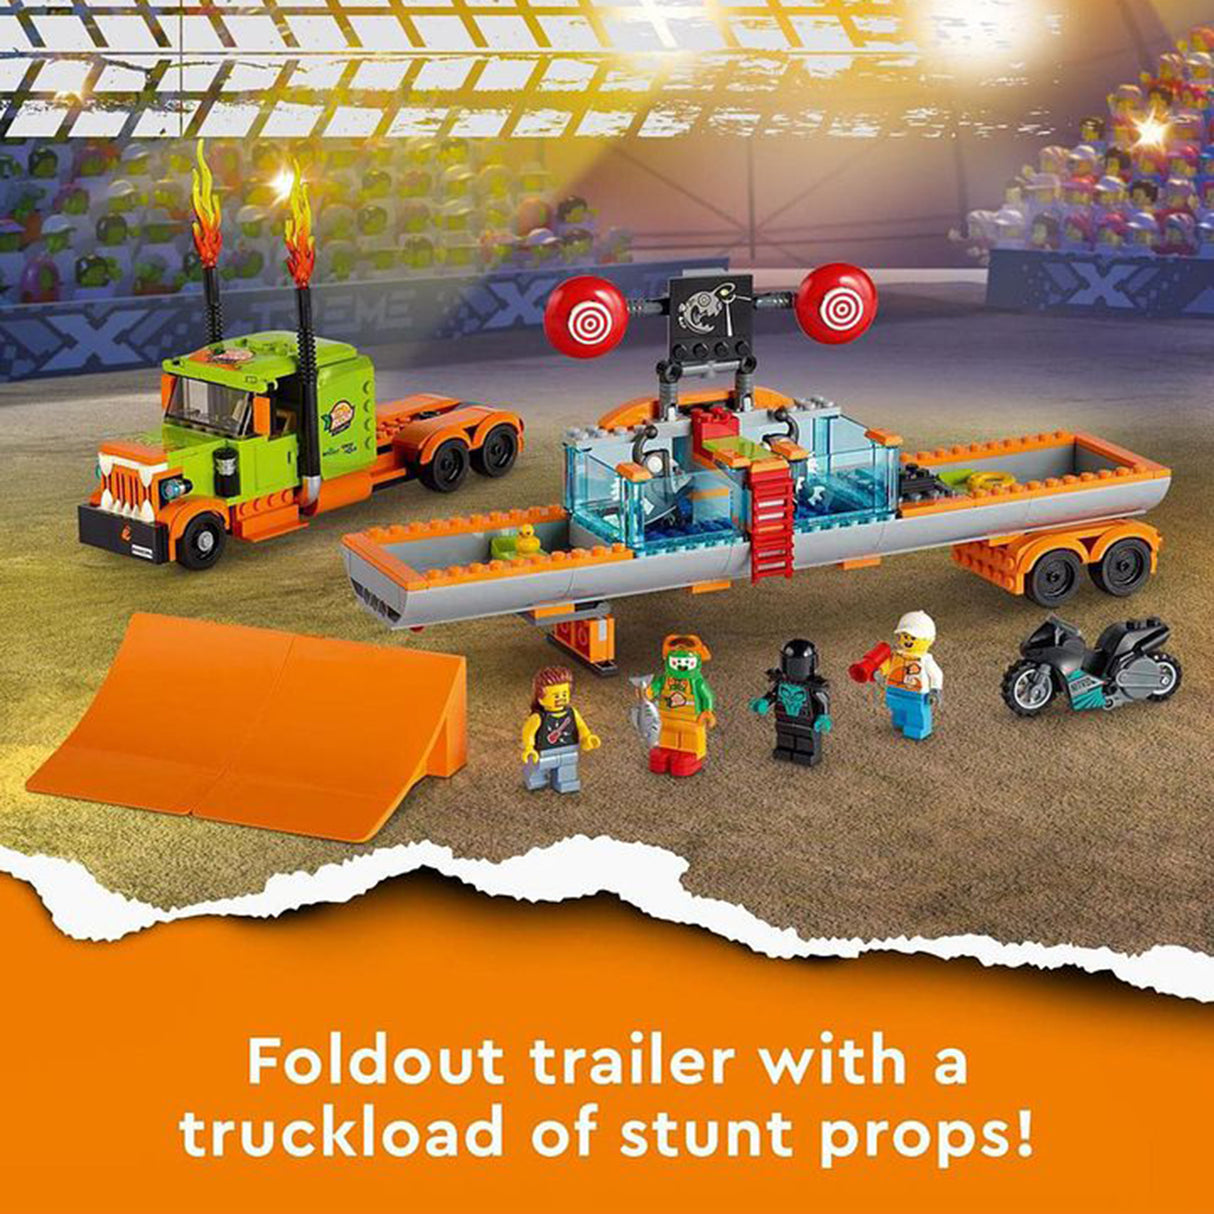 LEGO City Stunt Show Truck 60294 (420 pieces)